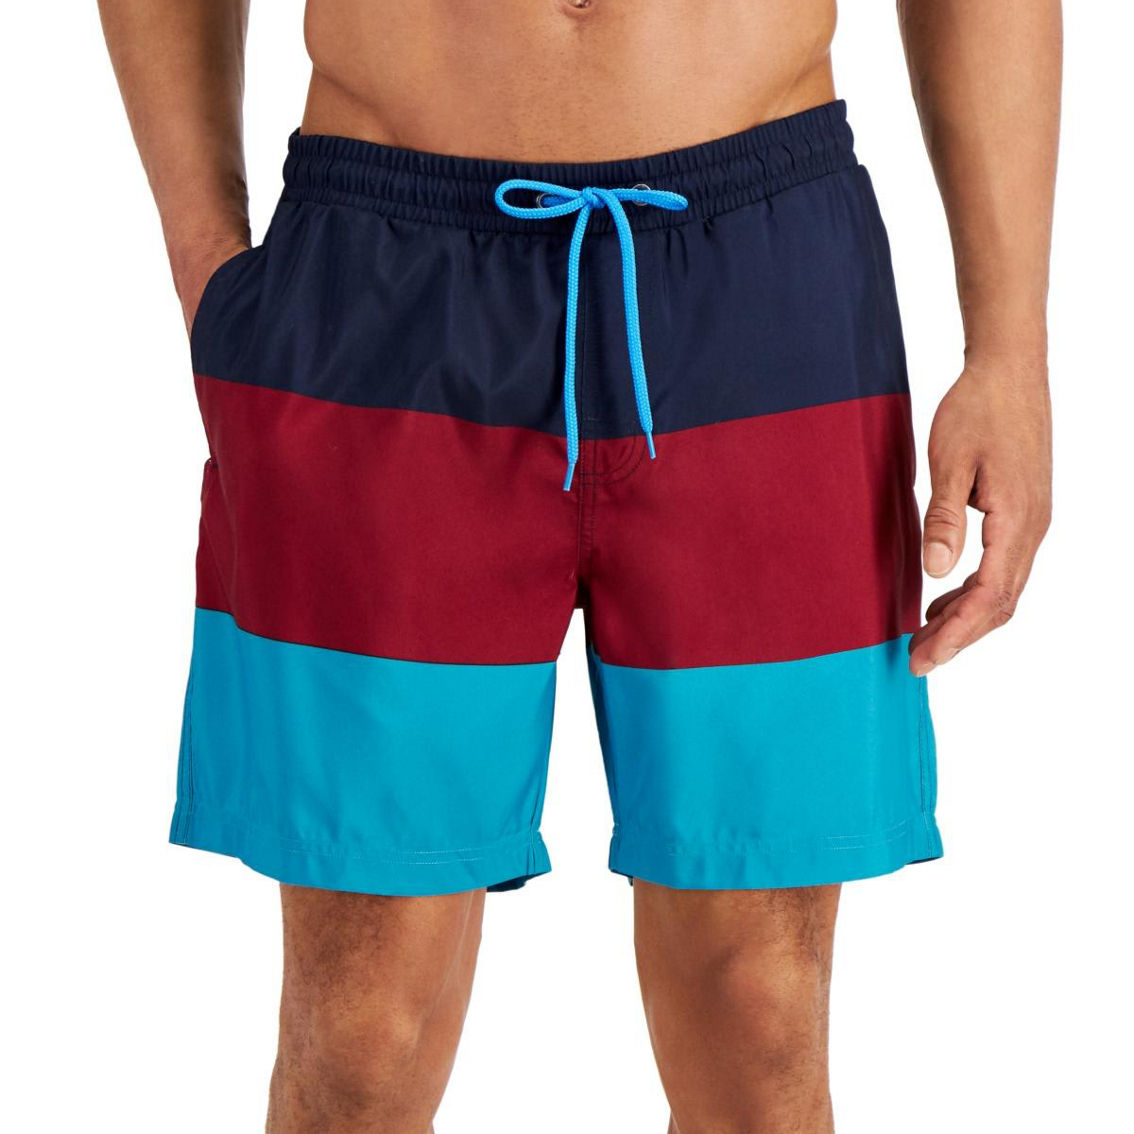 Mens Striped Colorblocked Swim Trunks - Image 4 of 4